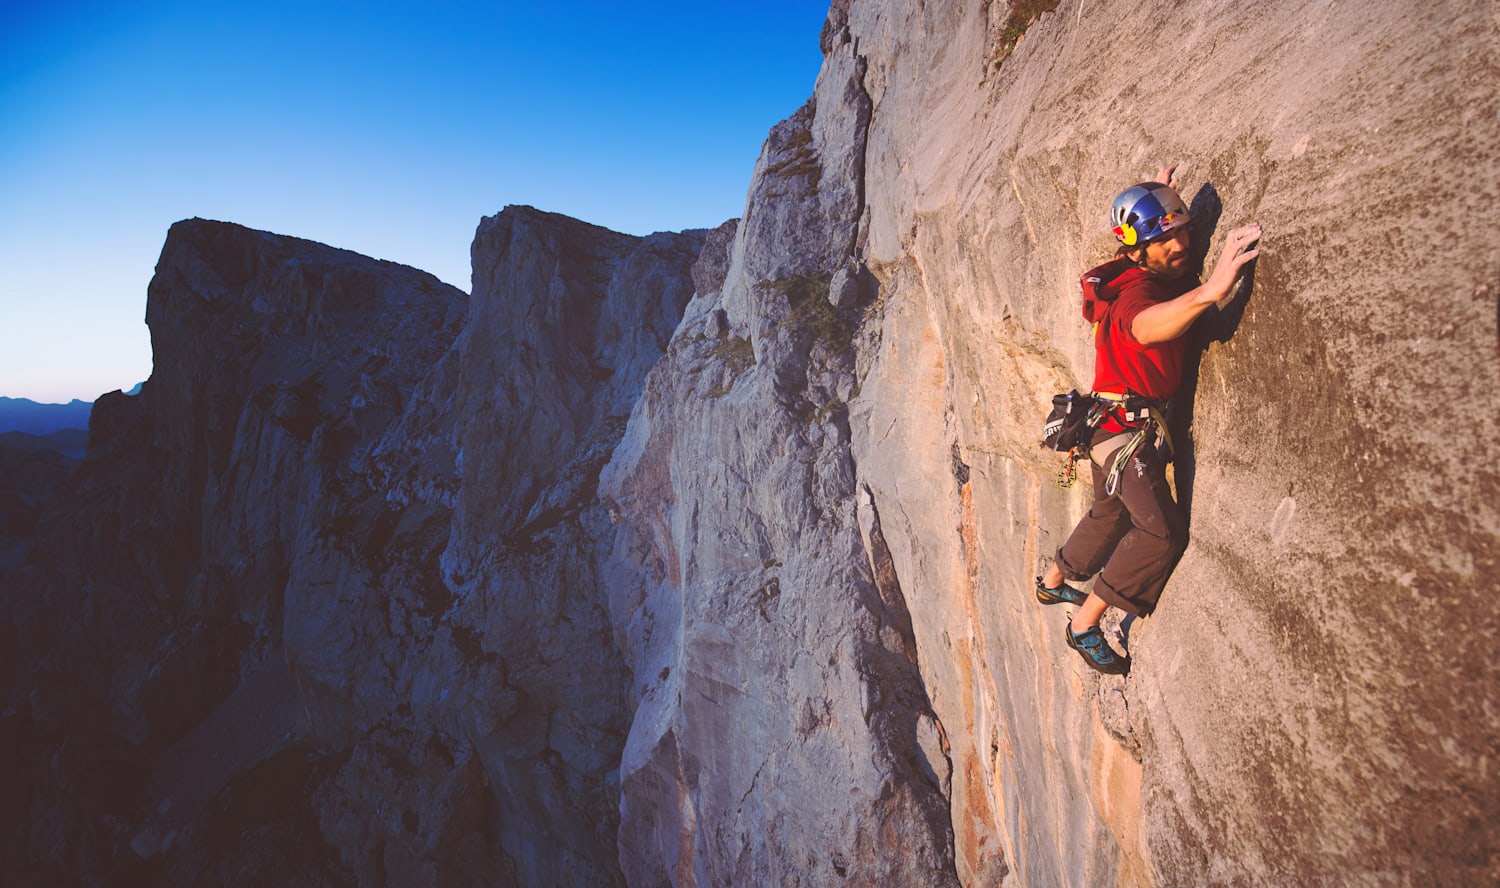 Climber Sasha DiGiulian aims to reach new heights this summer